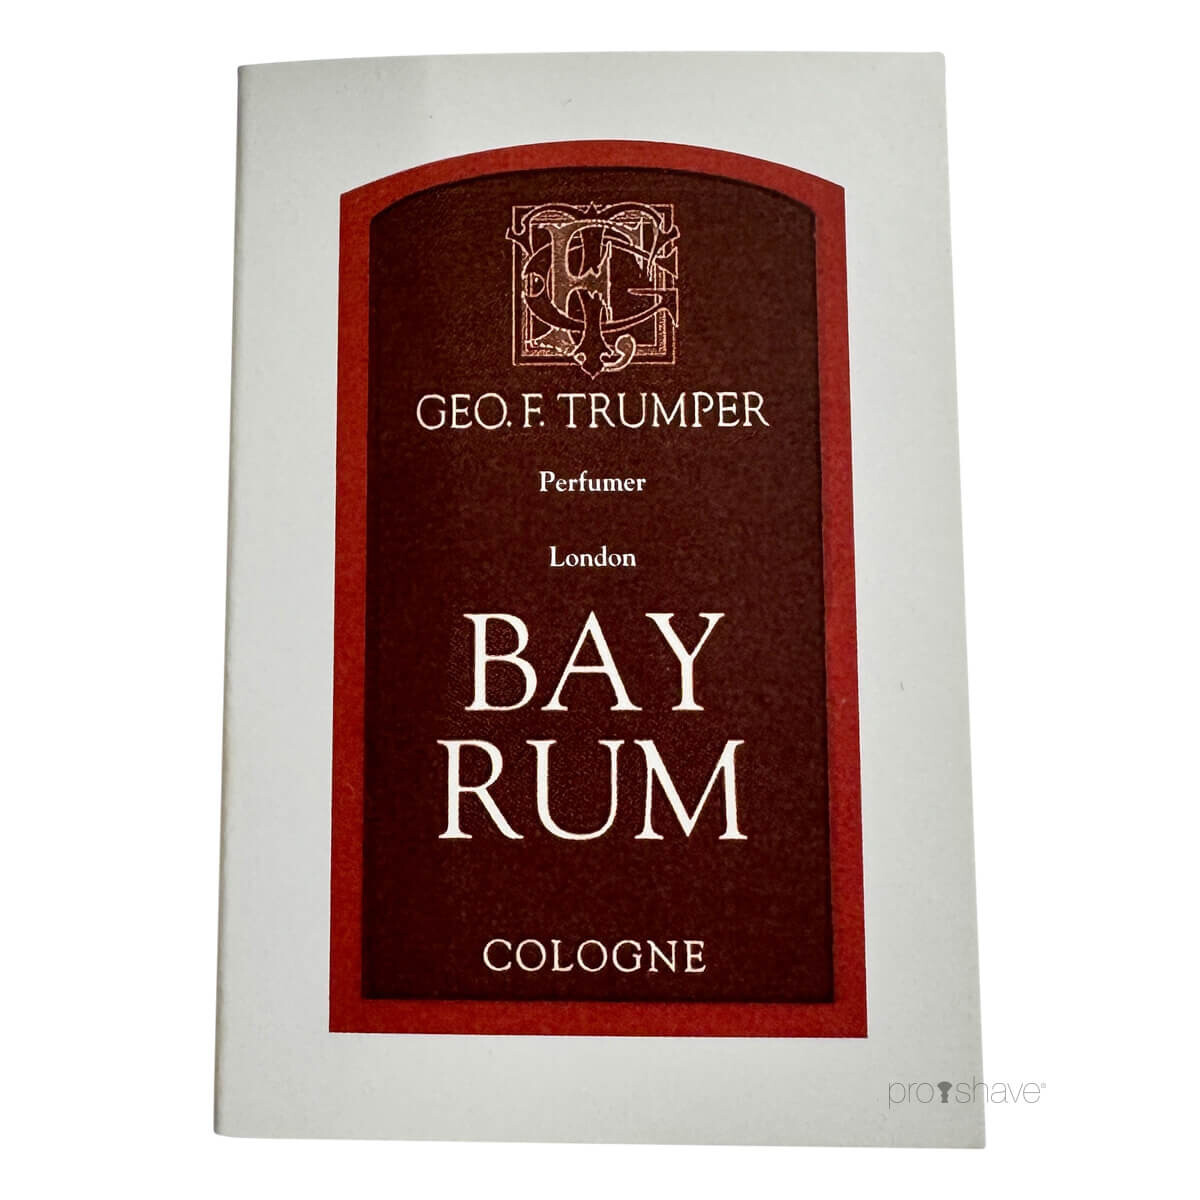 Se Geo F Trumper Cologne, Bay Rum, Sample, 2 ml. hos Proshave